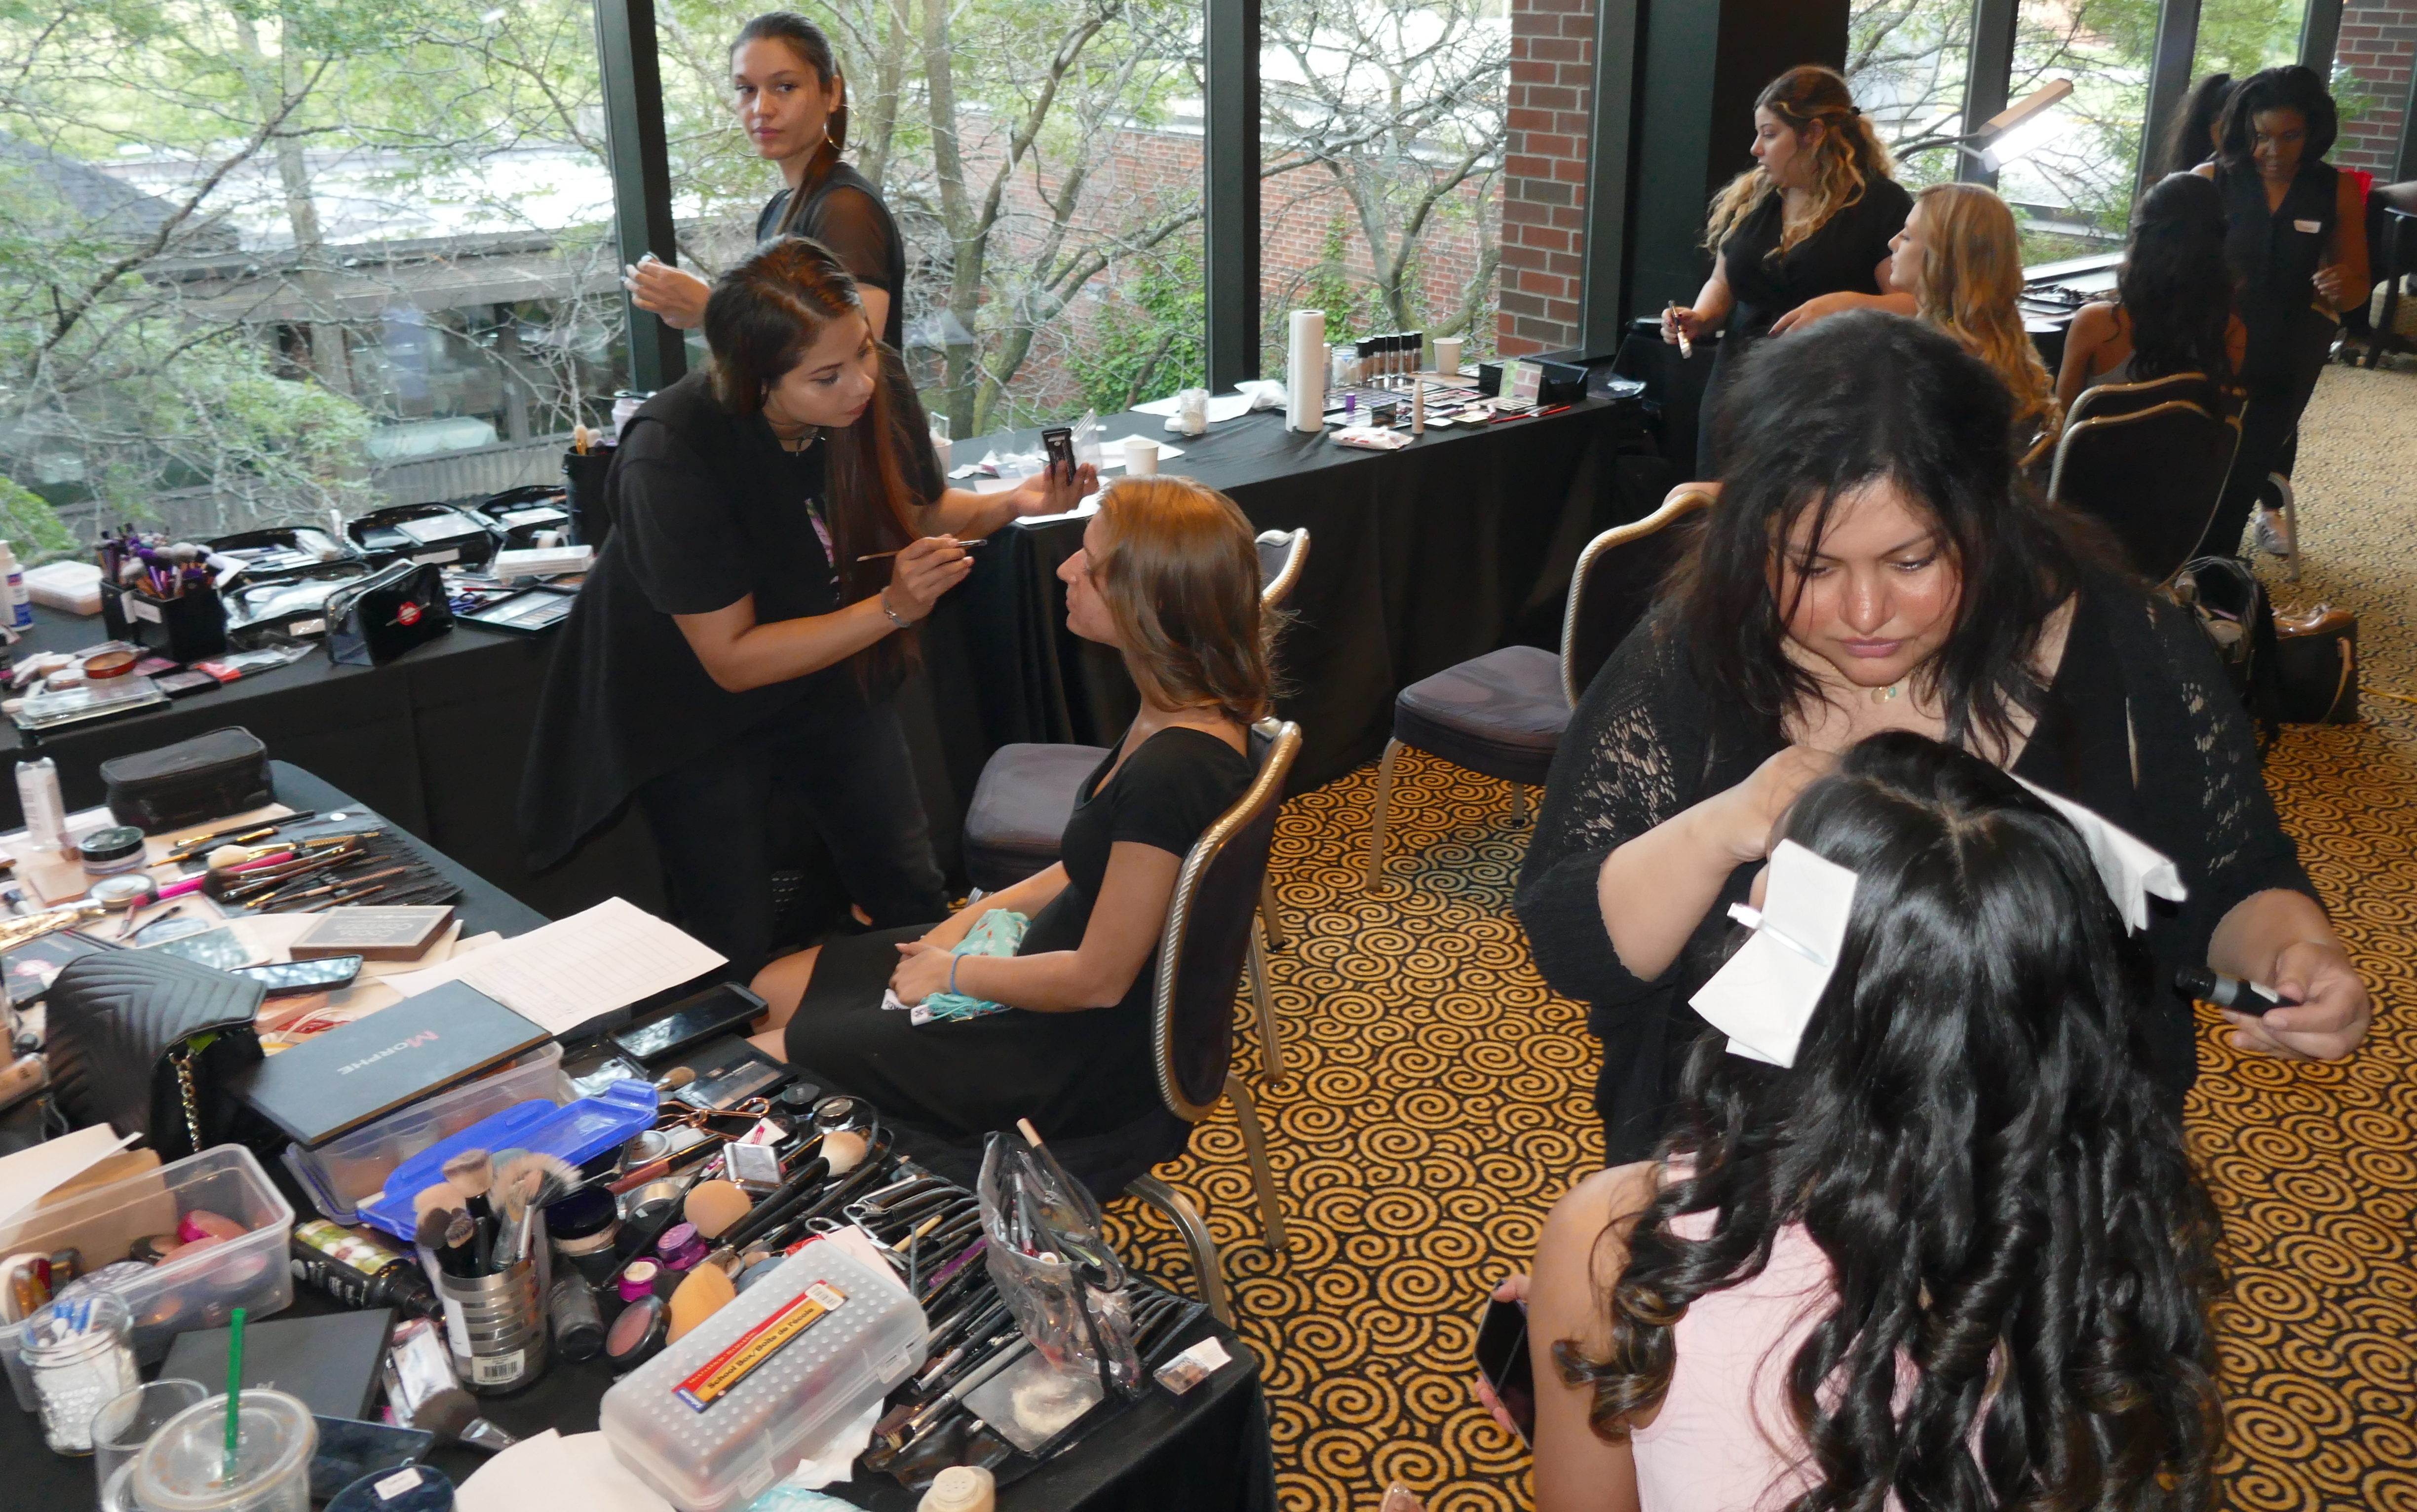 Modern makeup at work in markham Ontario at Miss World Canada 2018 Preliminaries